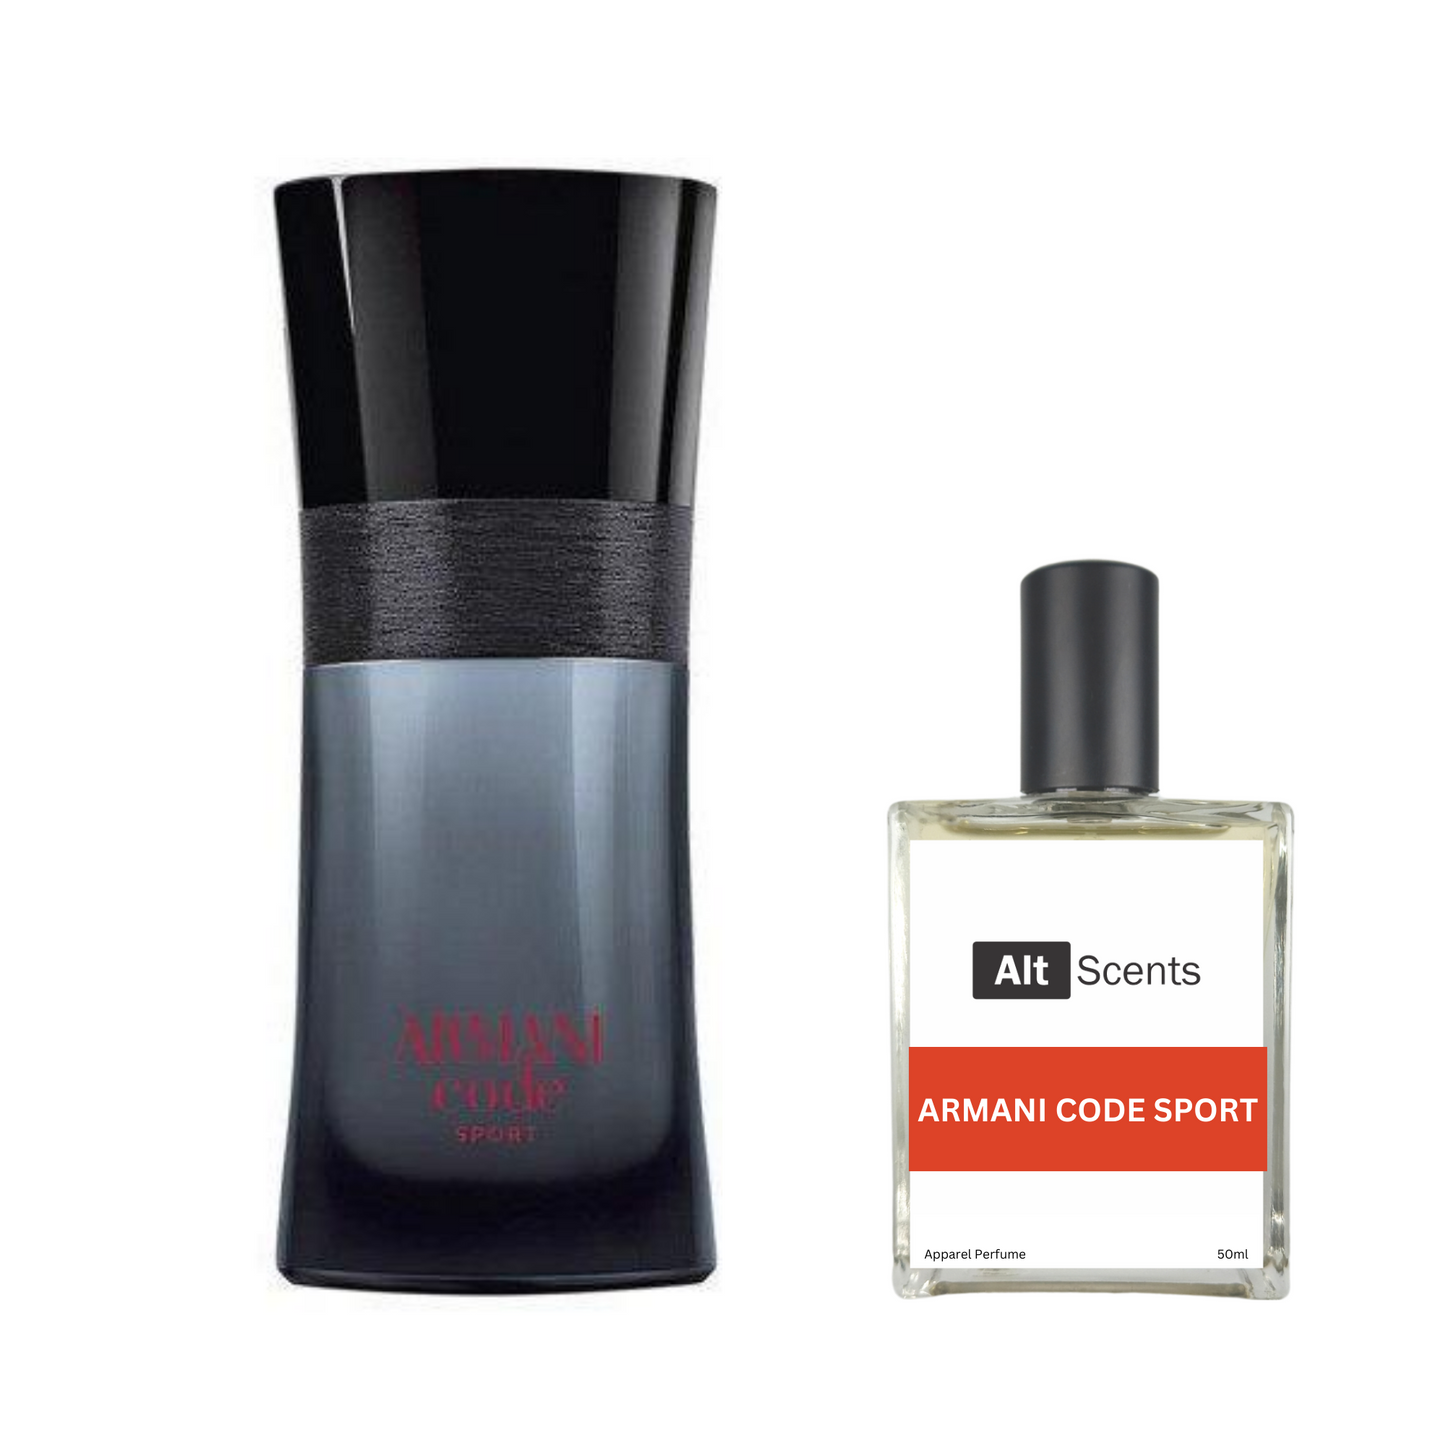 Armani Code Sport type Perfume for Men